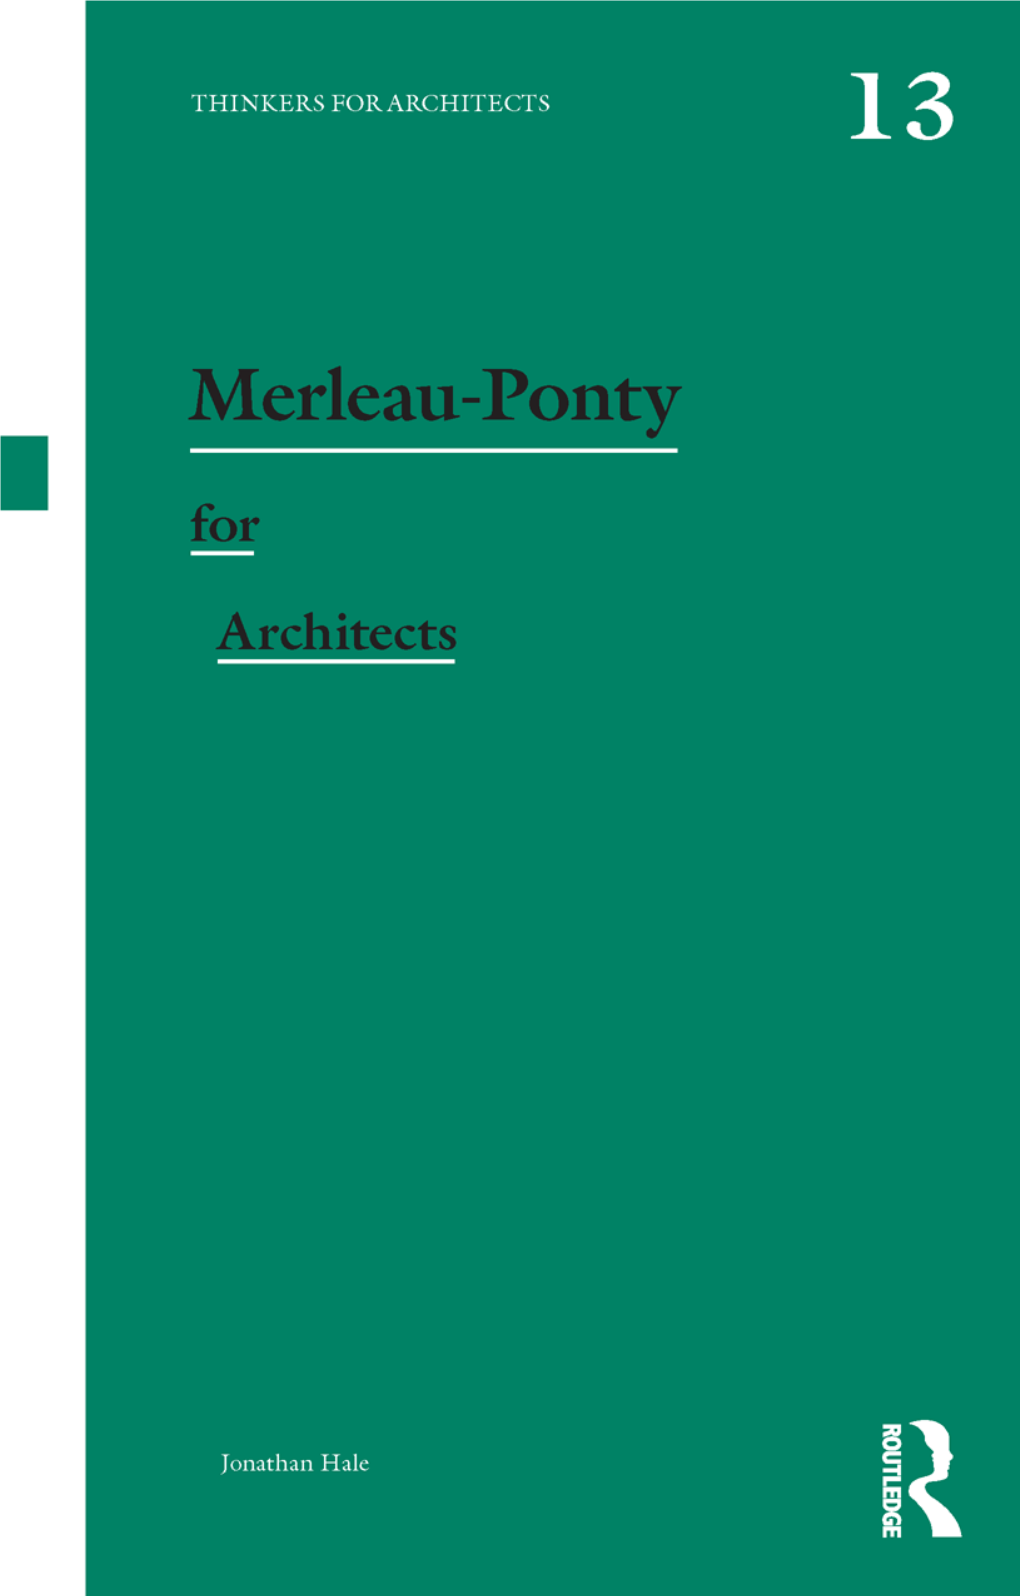 Merleau-Ponty for Architects